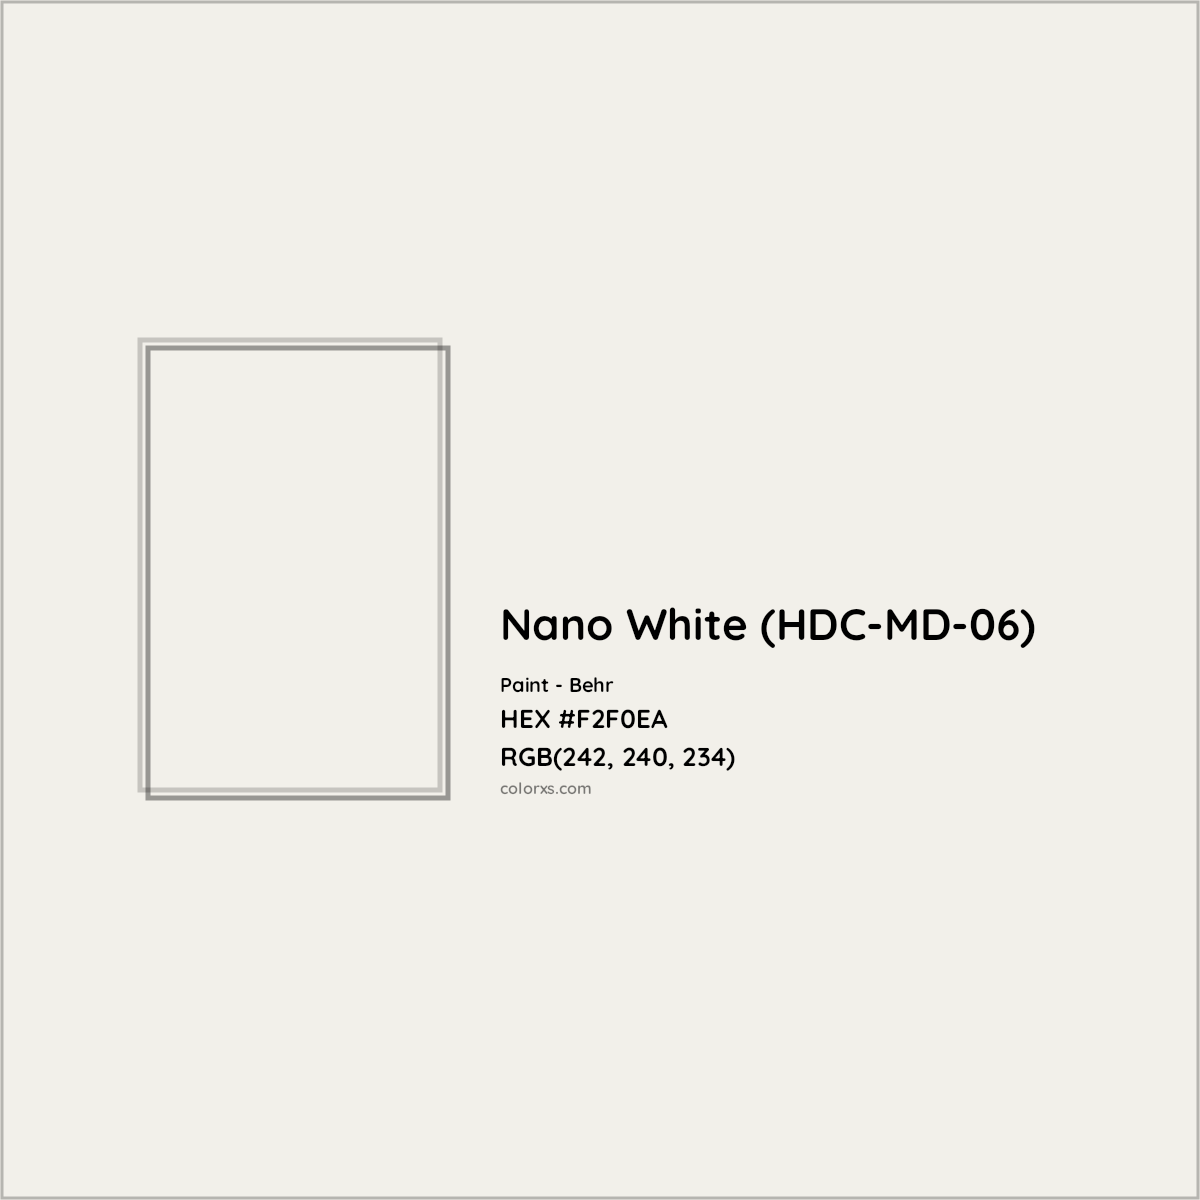 HEX #F2F0EA Nano White (HDC-MD-06) Paint Behr - Color Code